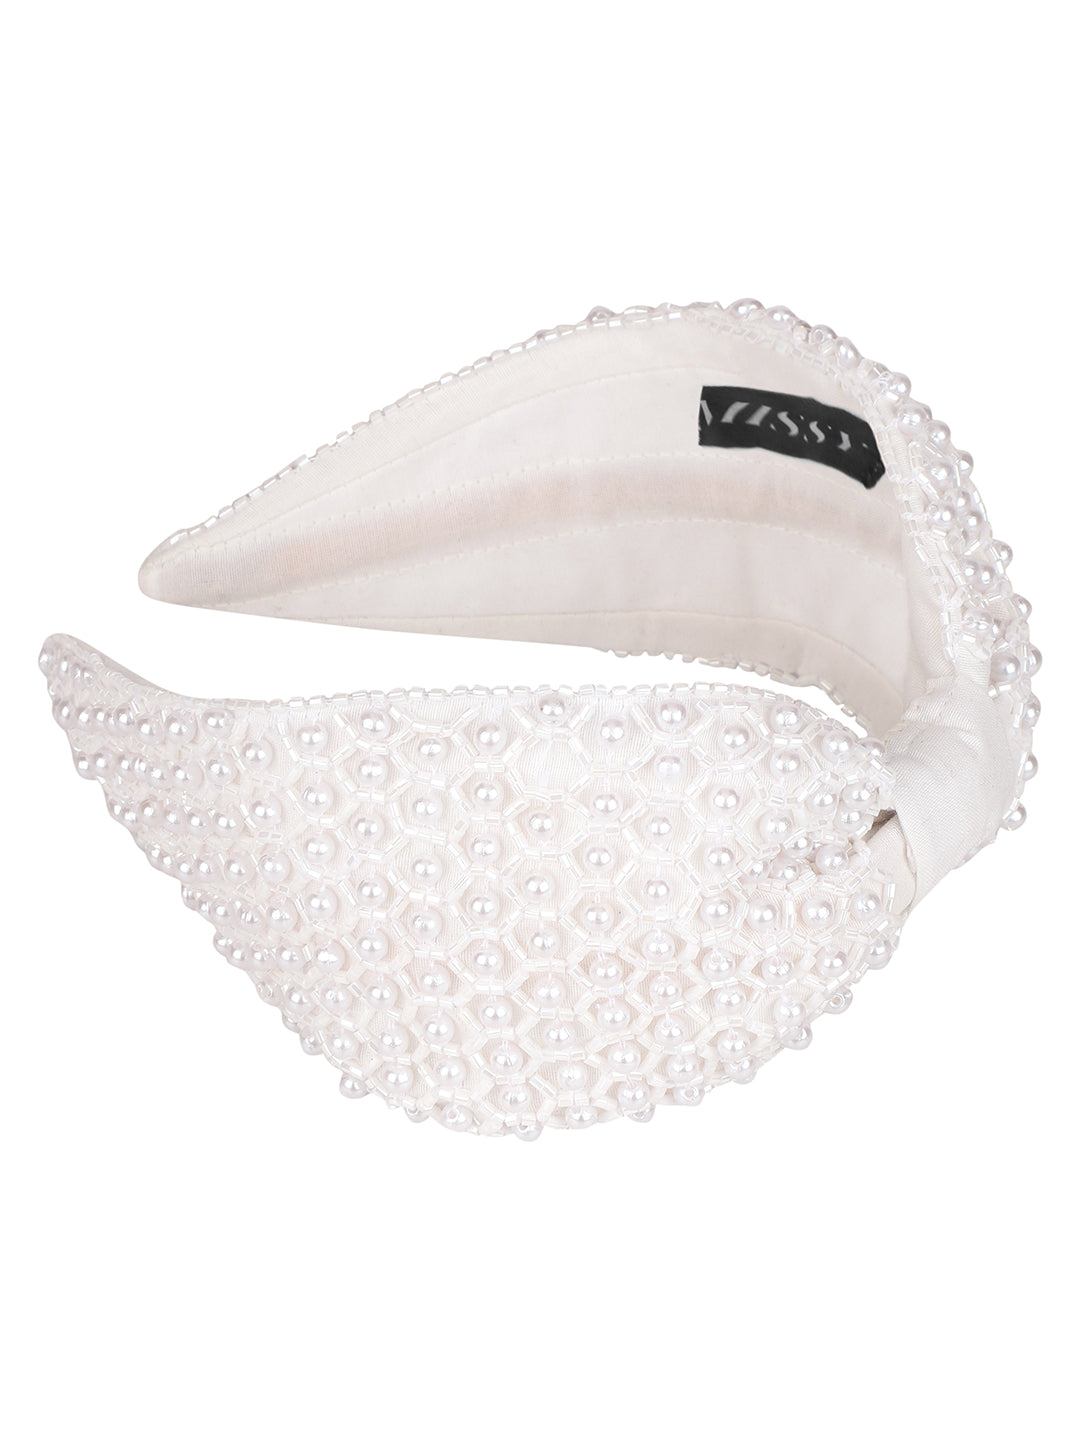 All-Over Pearl Headband White